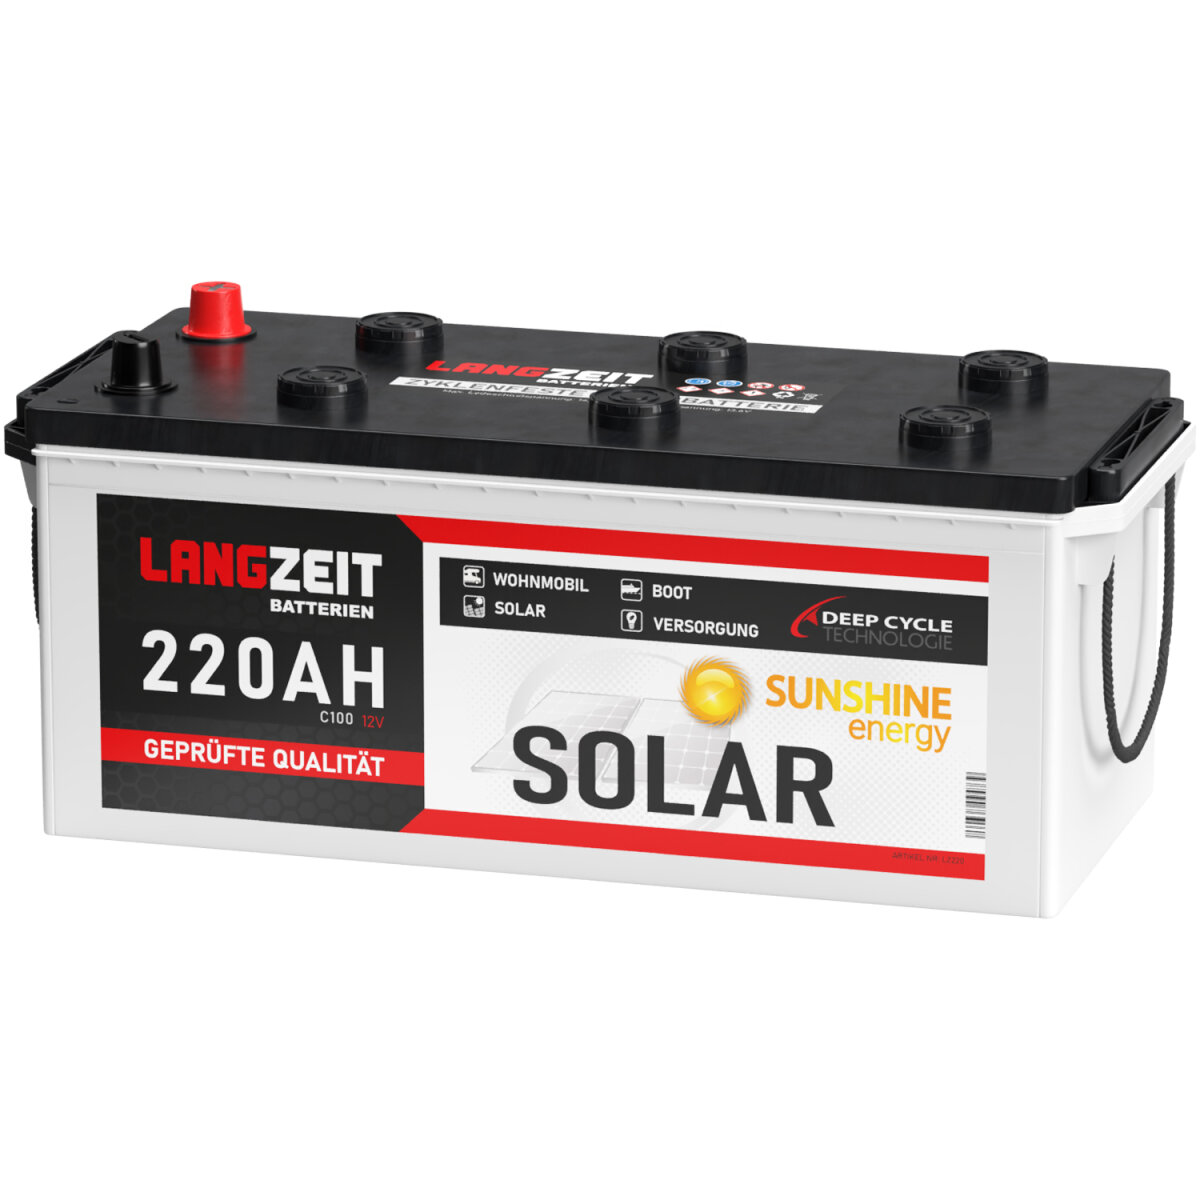 https://www.winnerbatterien.de/media/image/product/8605/lg/langzeit-solarbatterie-220ah-12v.jpg